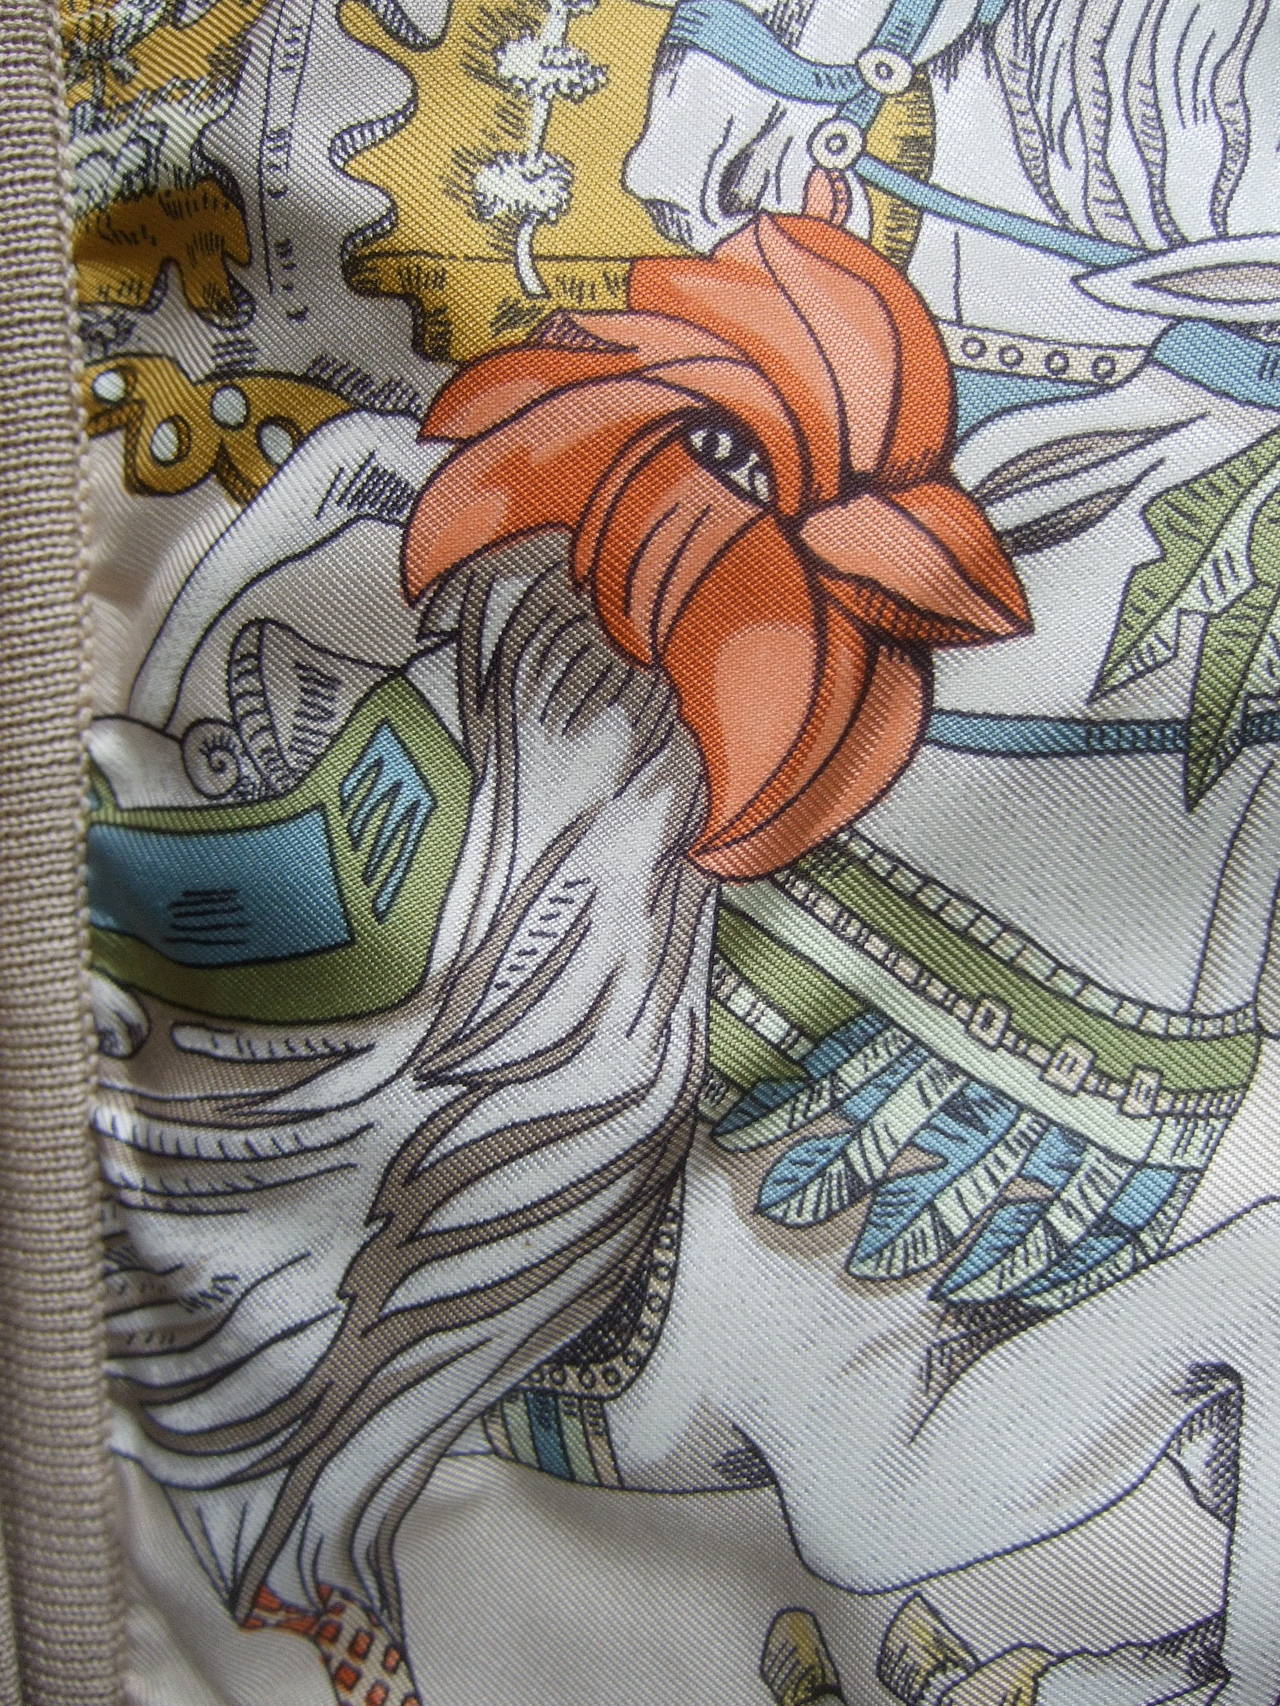 Hermes Paris Luxurious Silk Panel Cardigan Size 46 2